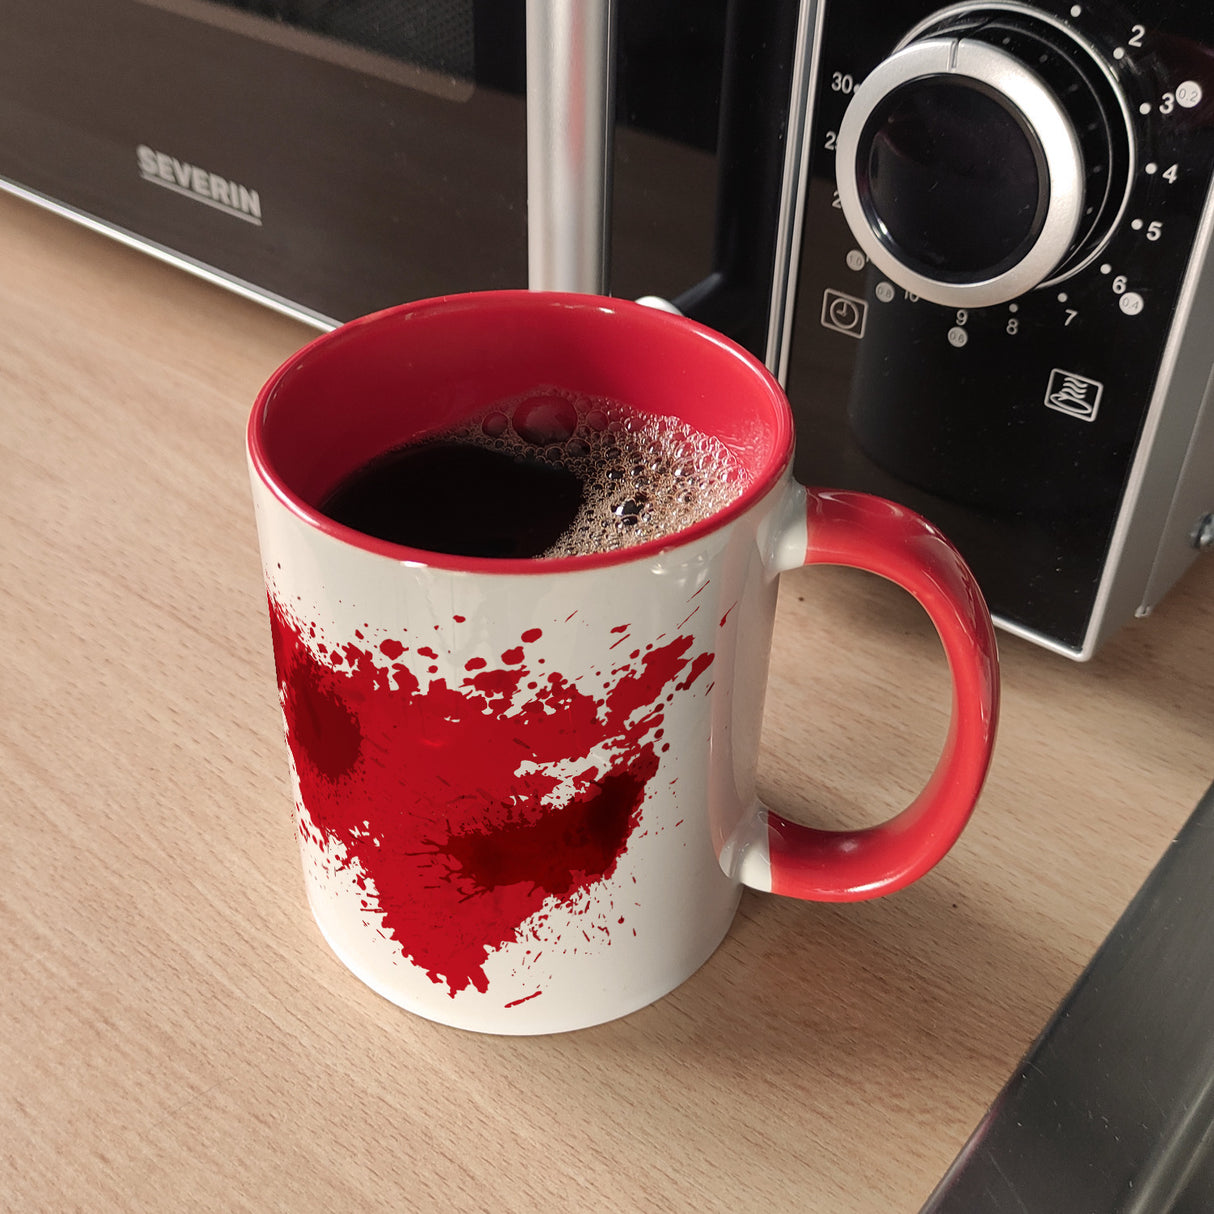 Kaffeebecher mit Blutbad Motiv